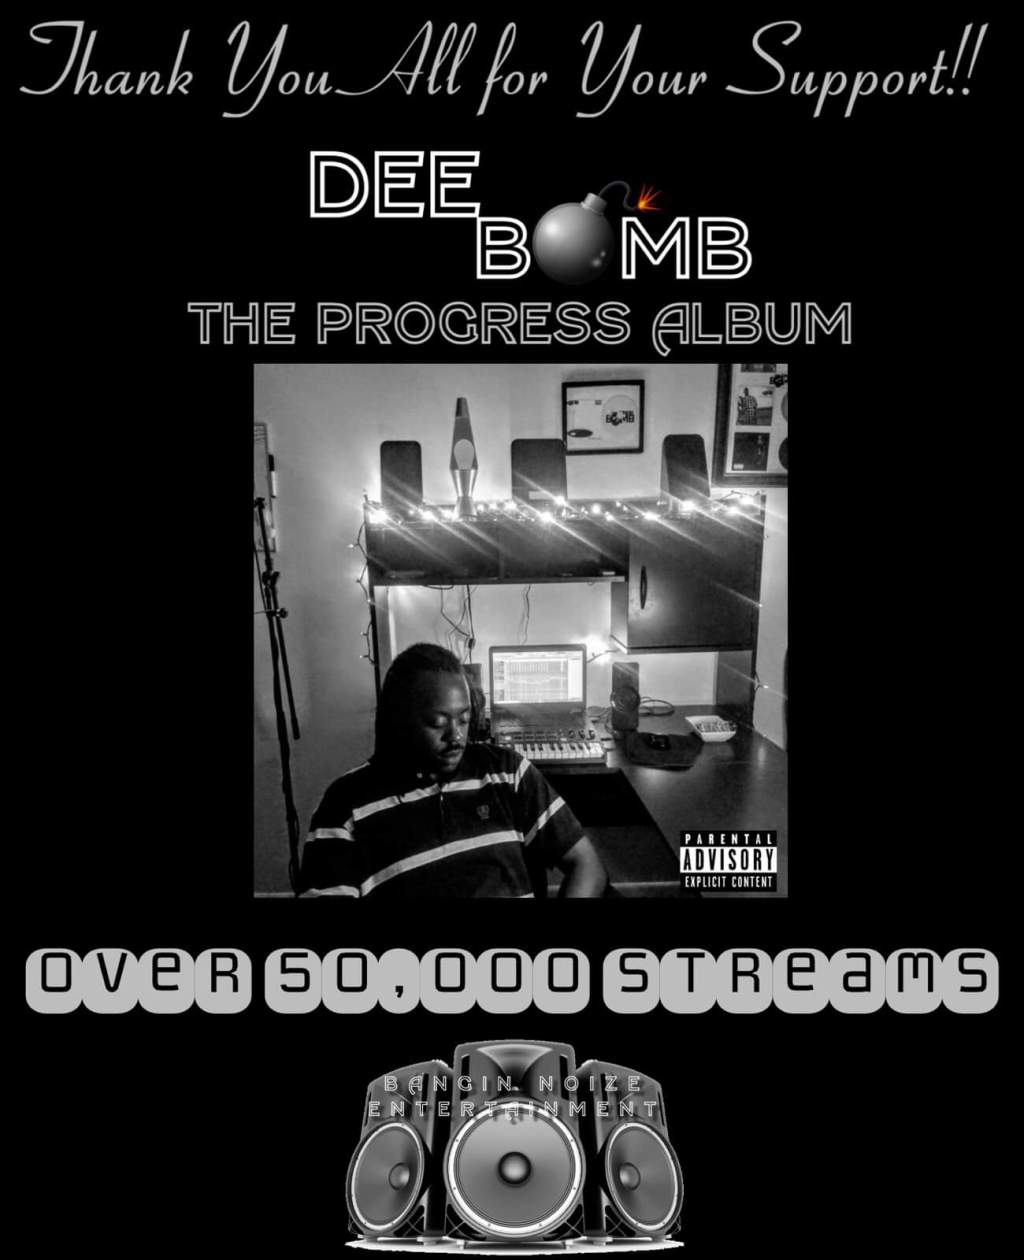 Dee Bomb’s “The Progress Album” becomes his most streamed album.